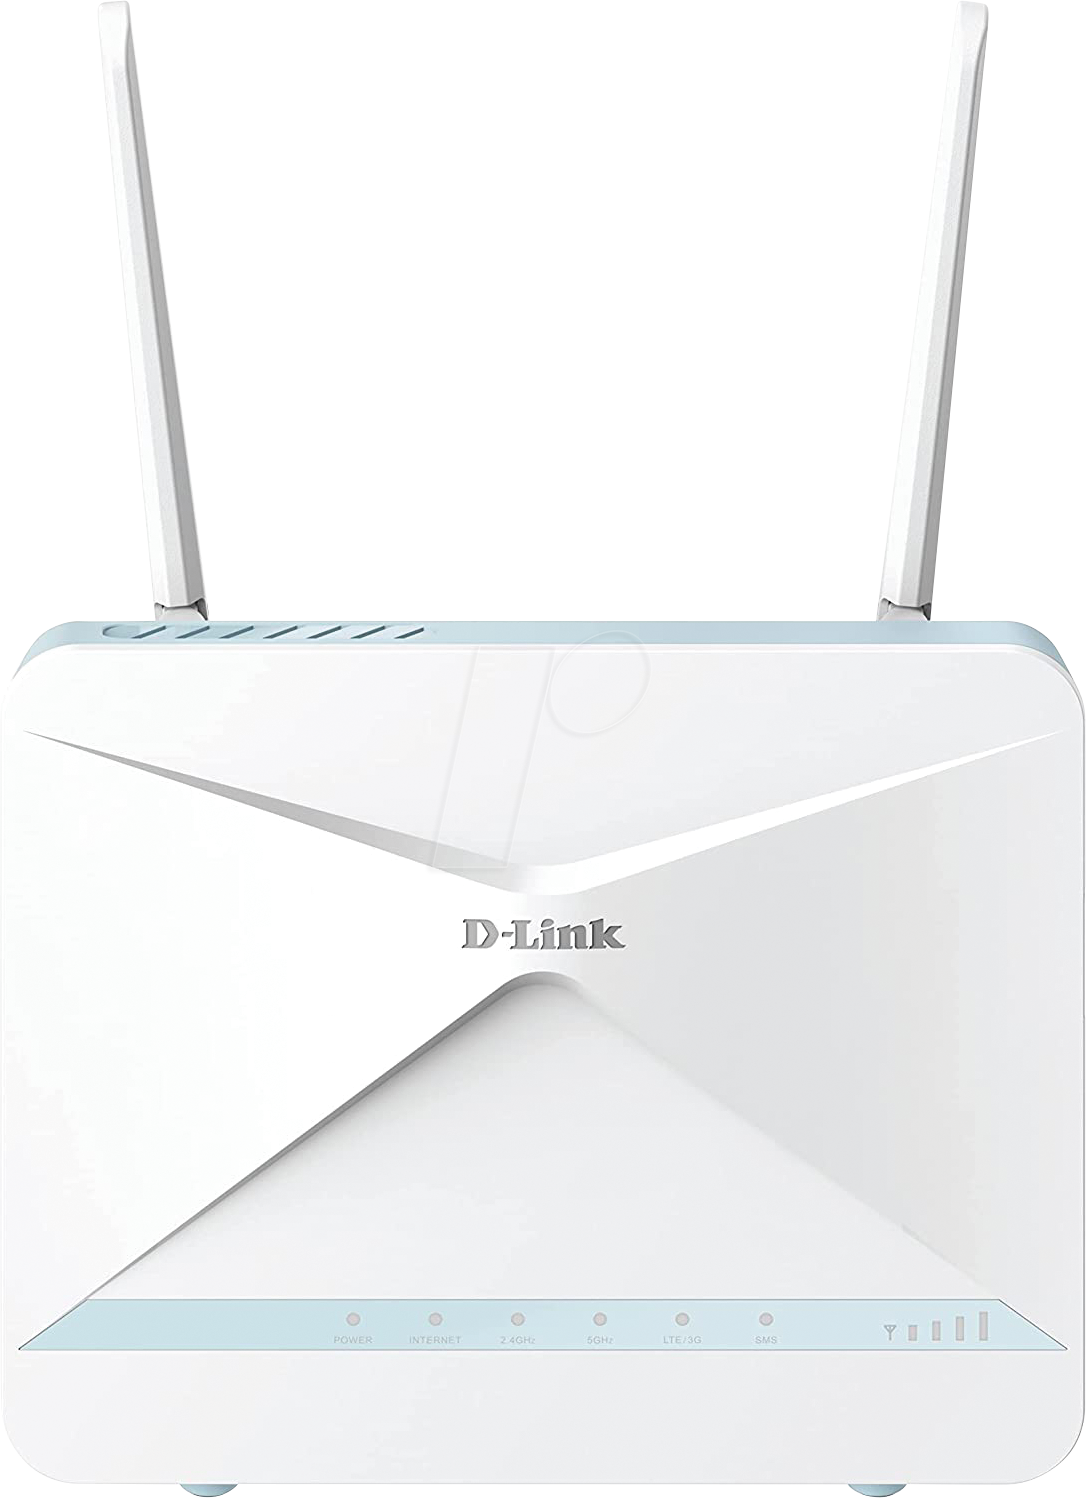 D-LINK G416 - WLAN Router 4G LTE 1501 MBit/s von D-Link